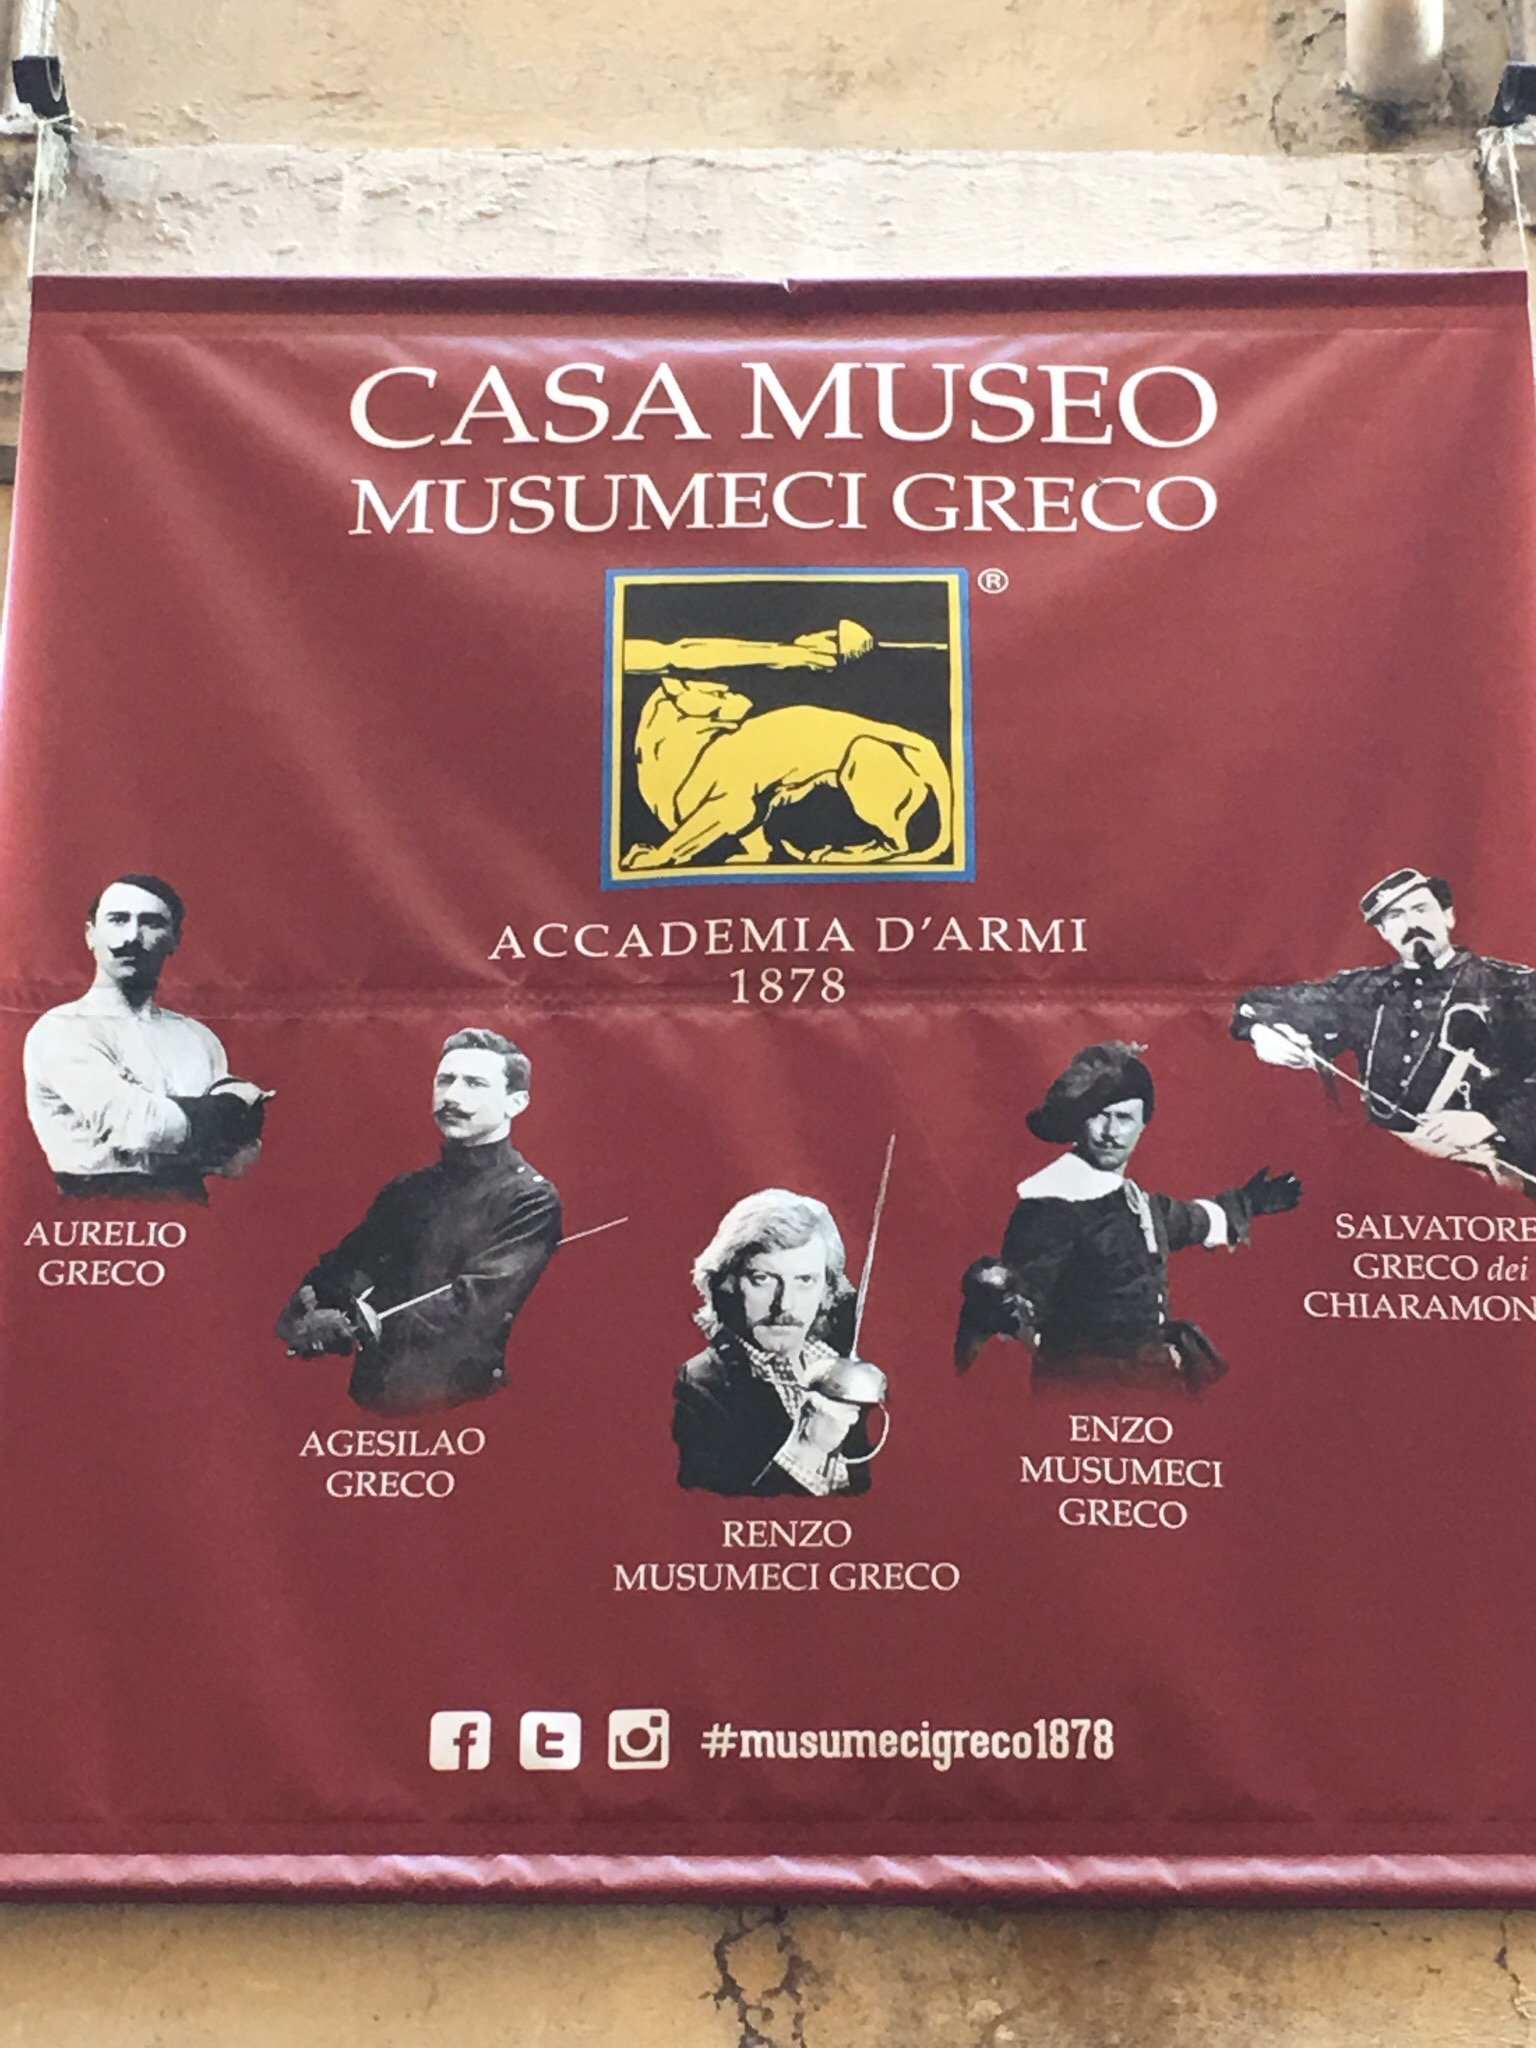 Casa Museo Accademia d’Armi Musumeci Greco